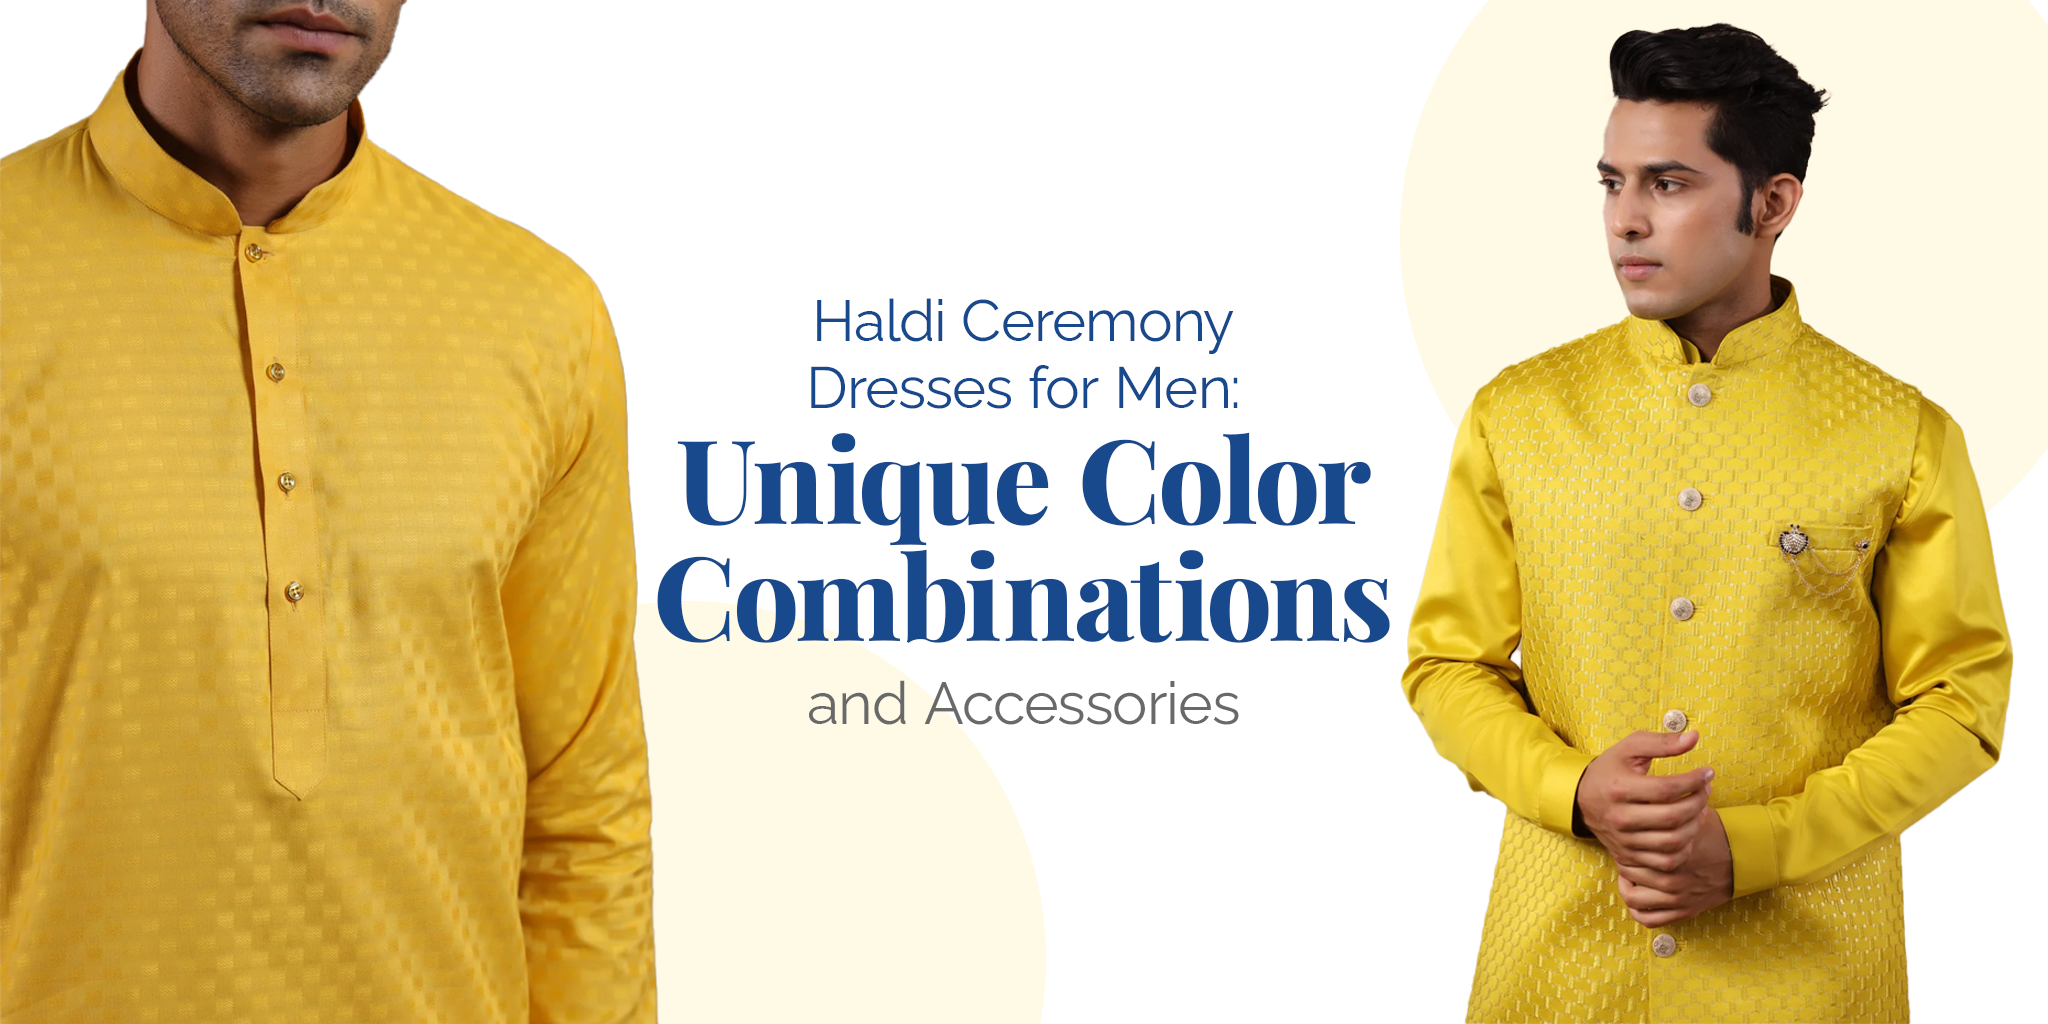 Haldi Ceremony Dresses for Men: Unique Color Combinations and Accessories